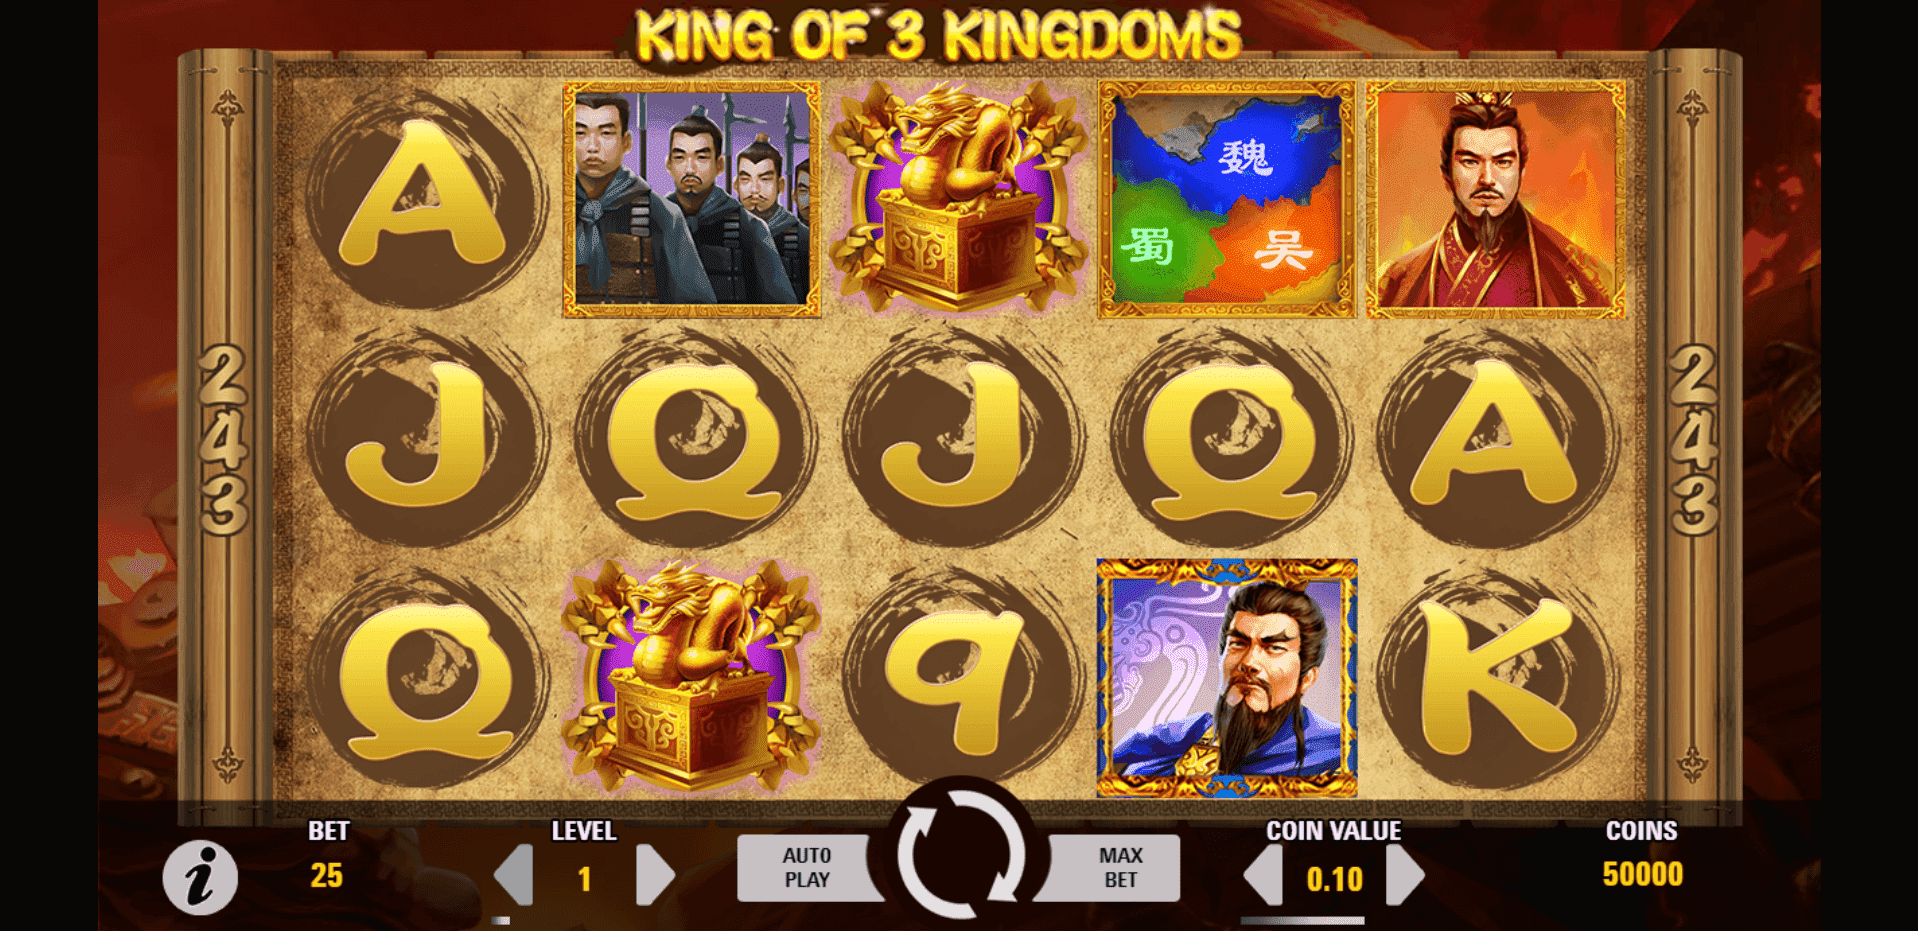 King of 3 Kingdoms slot play free